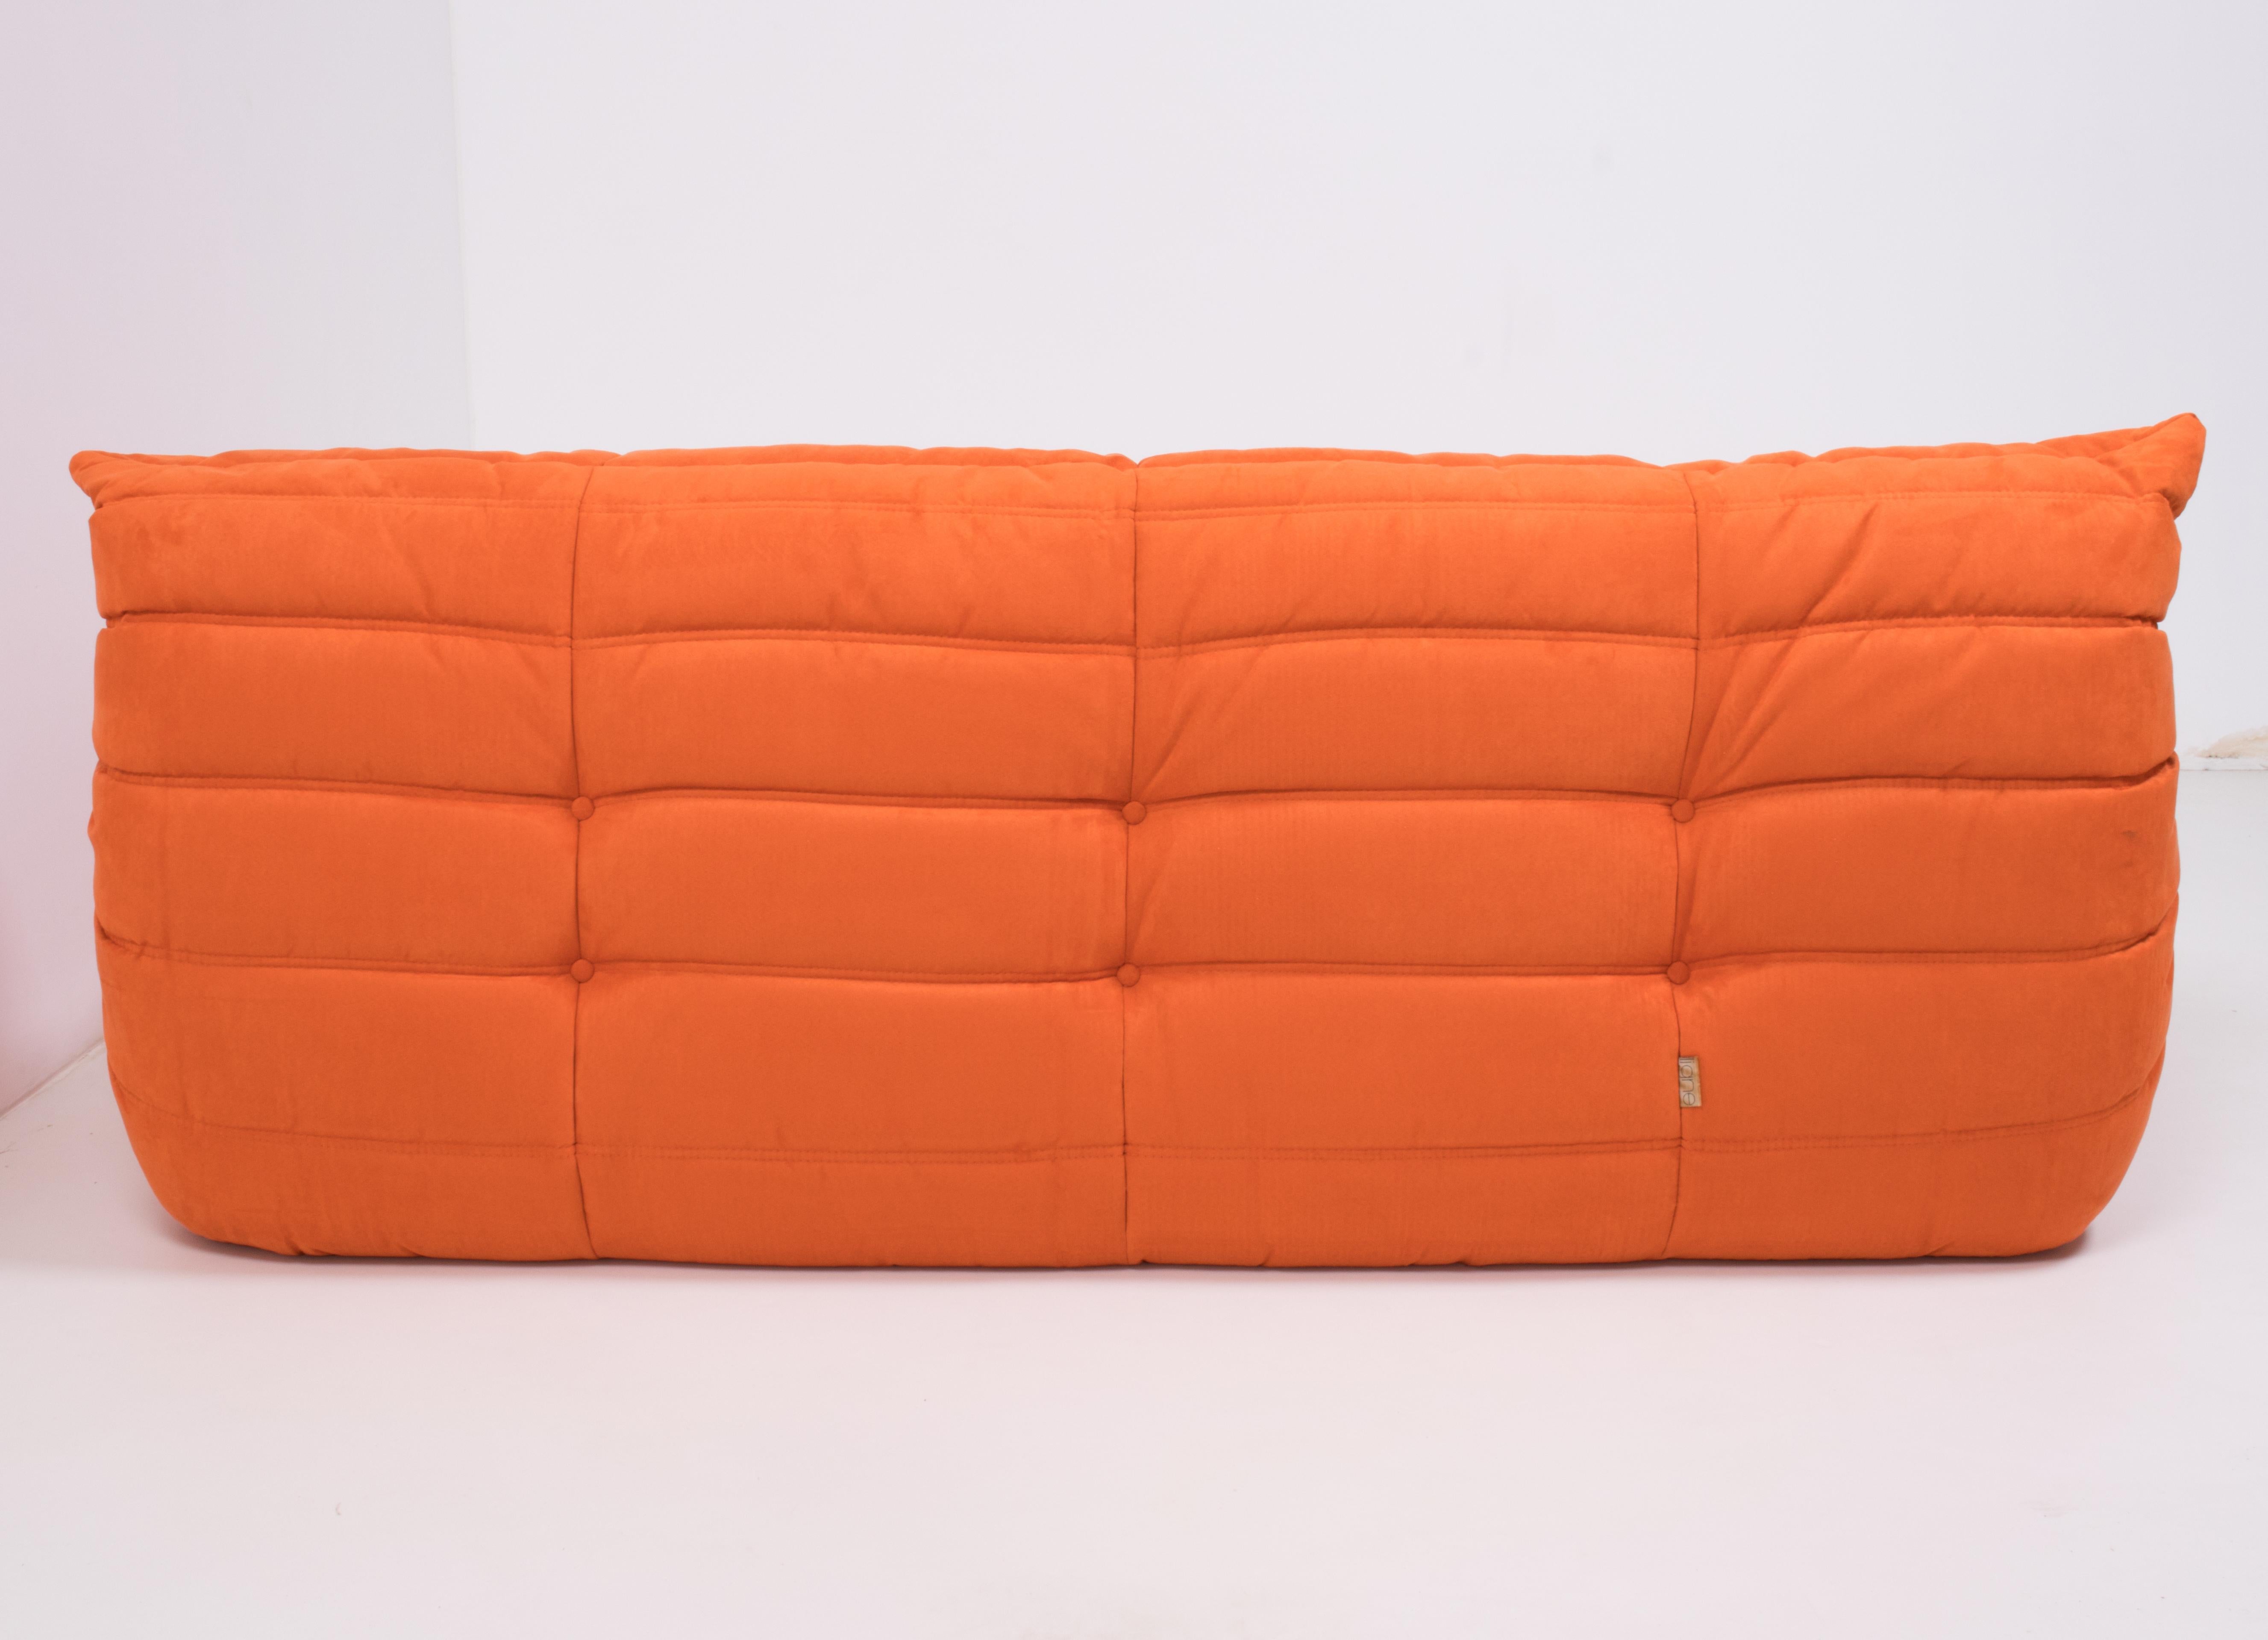 French Midcentury Togo Orange Large Sofa by Michel Ducaroy for Ligne Roset